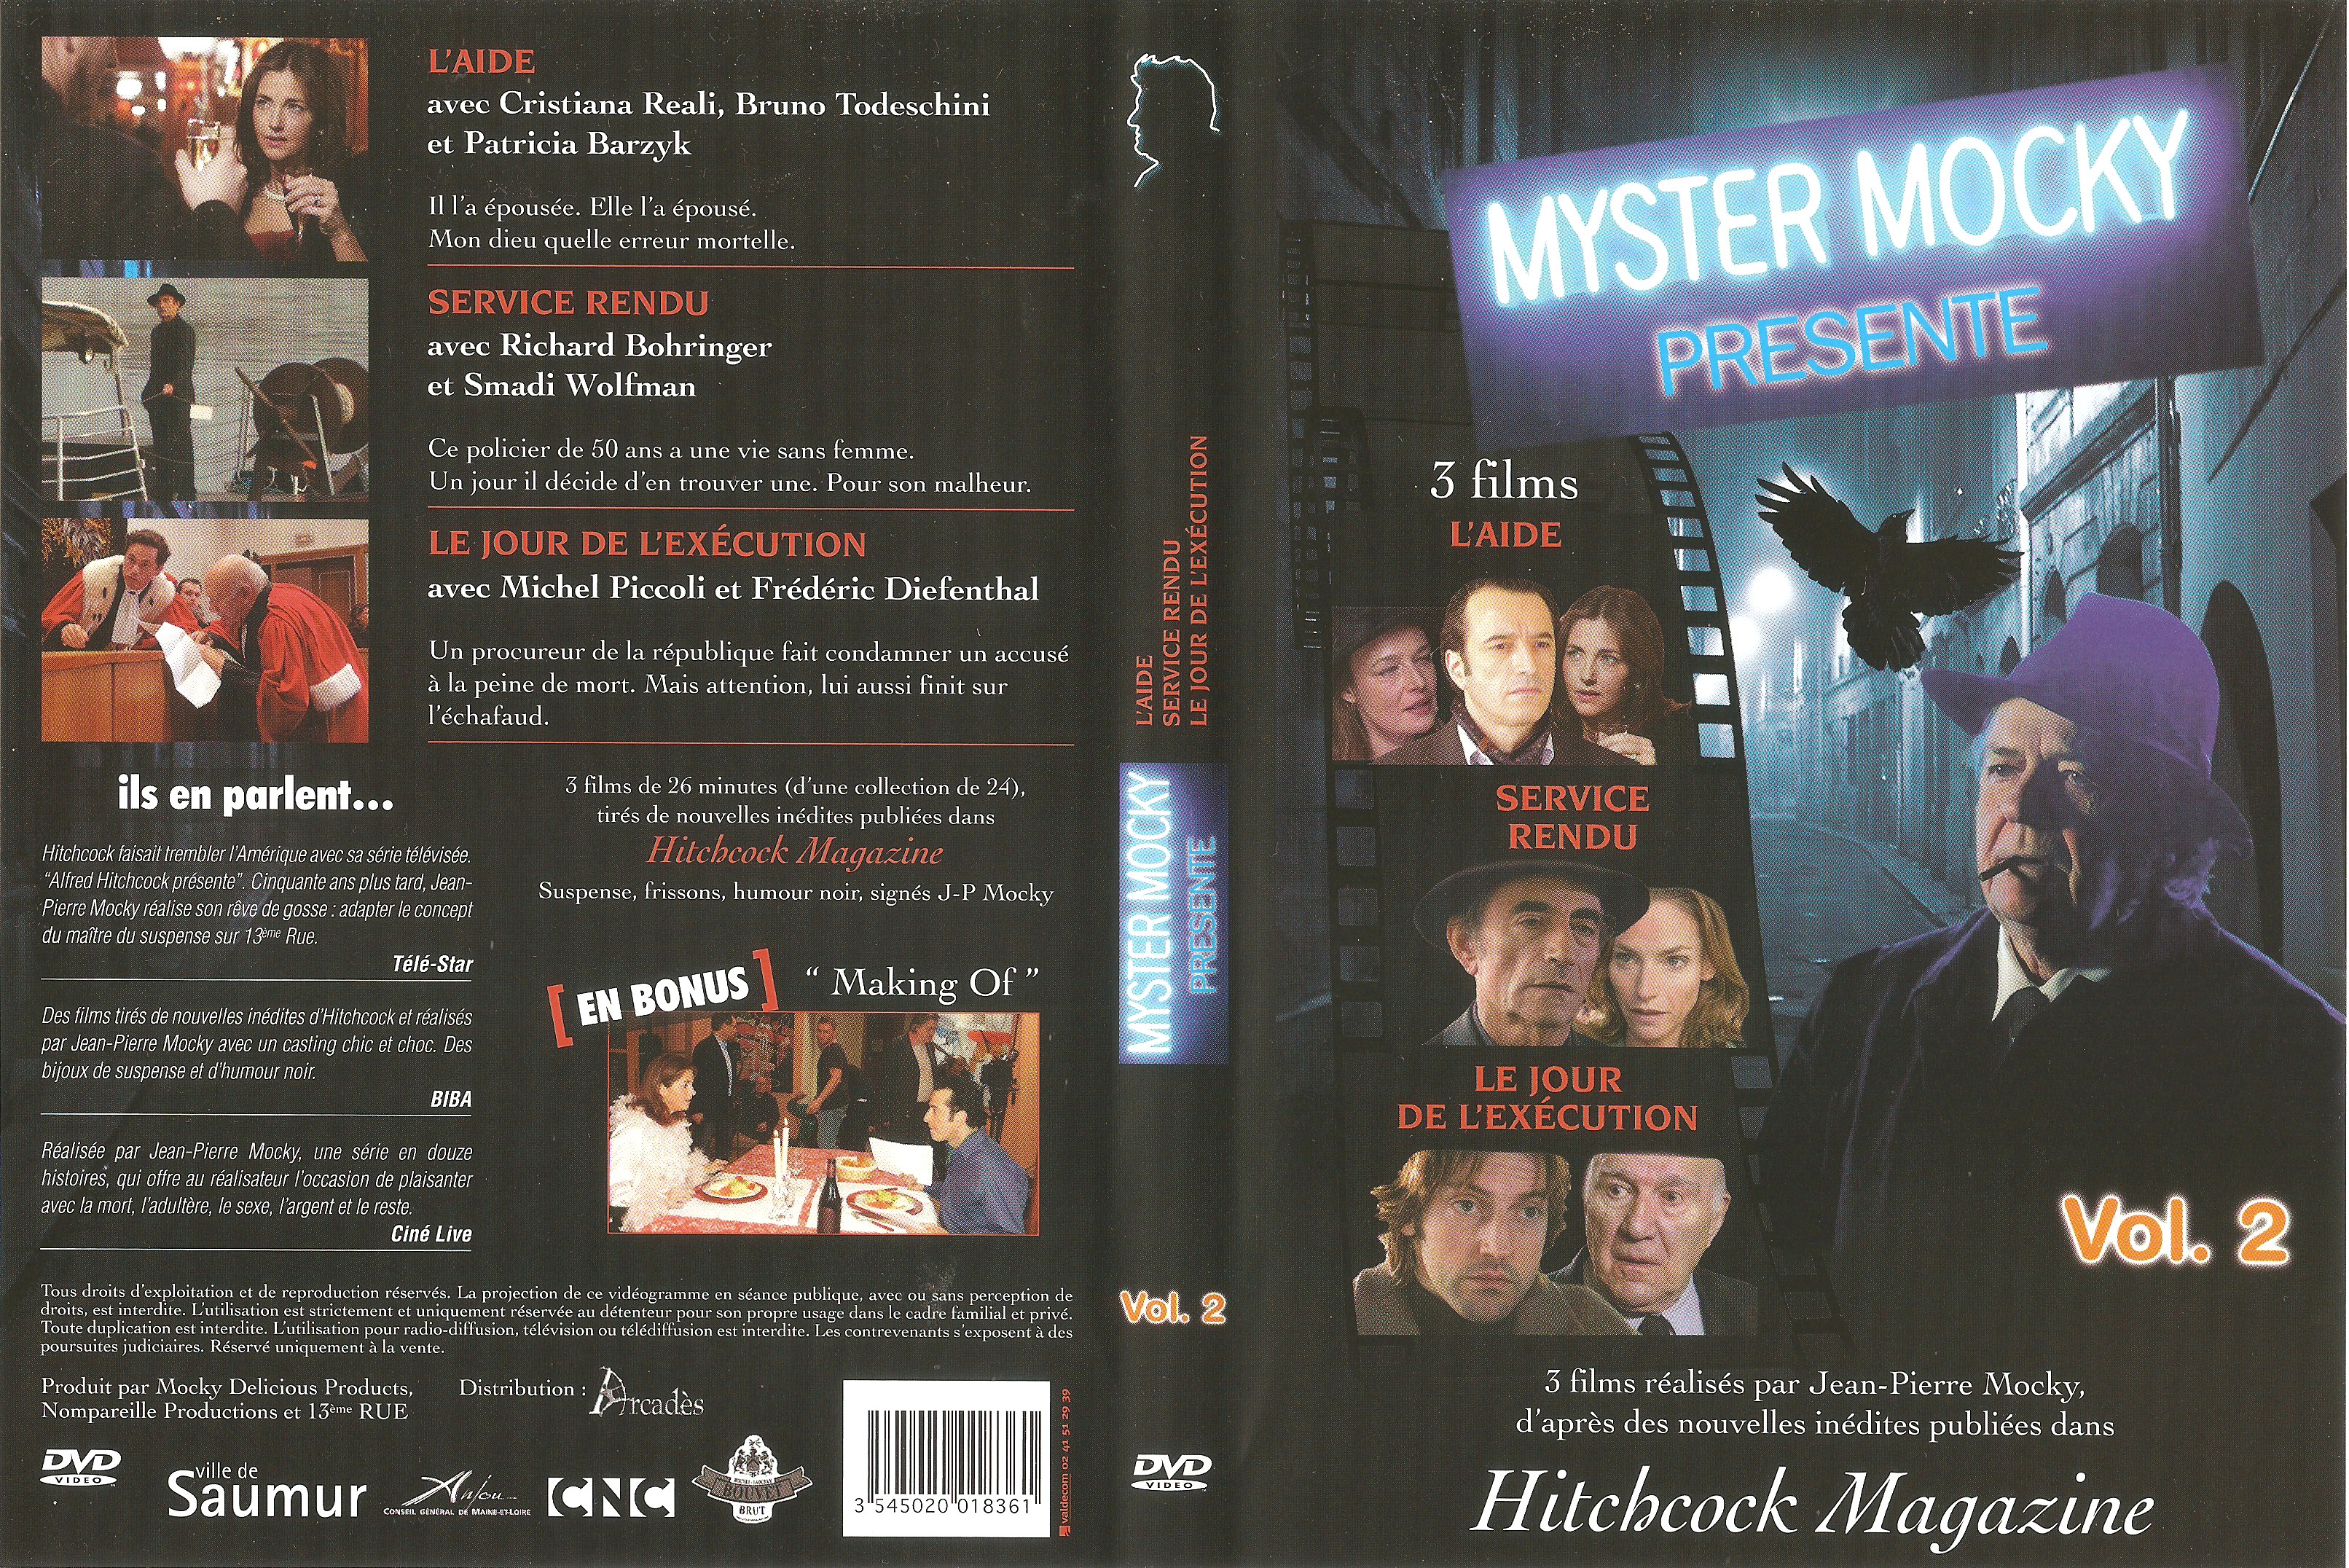 Jaquette DVD Myster Mocky prsente Vol 02